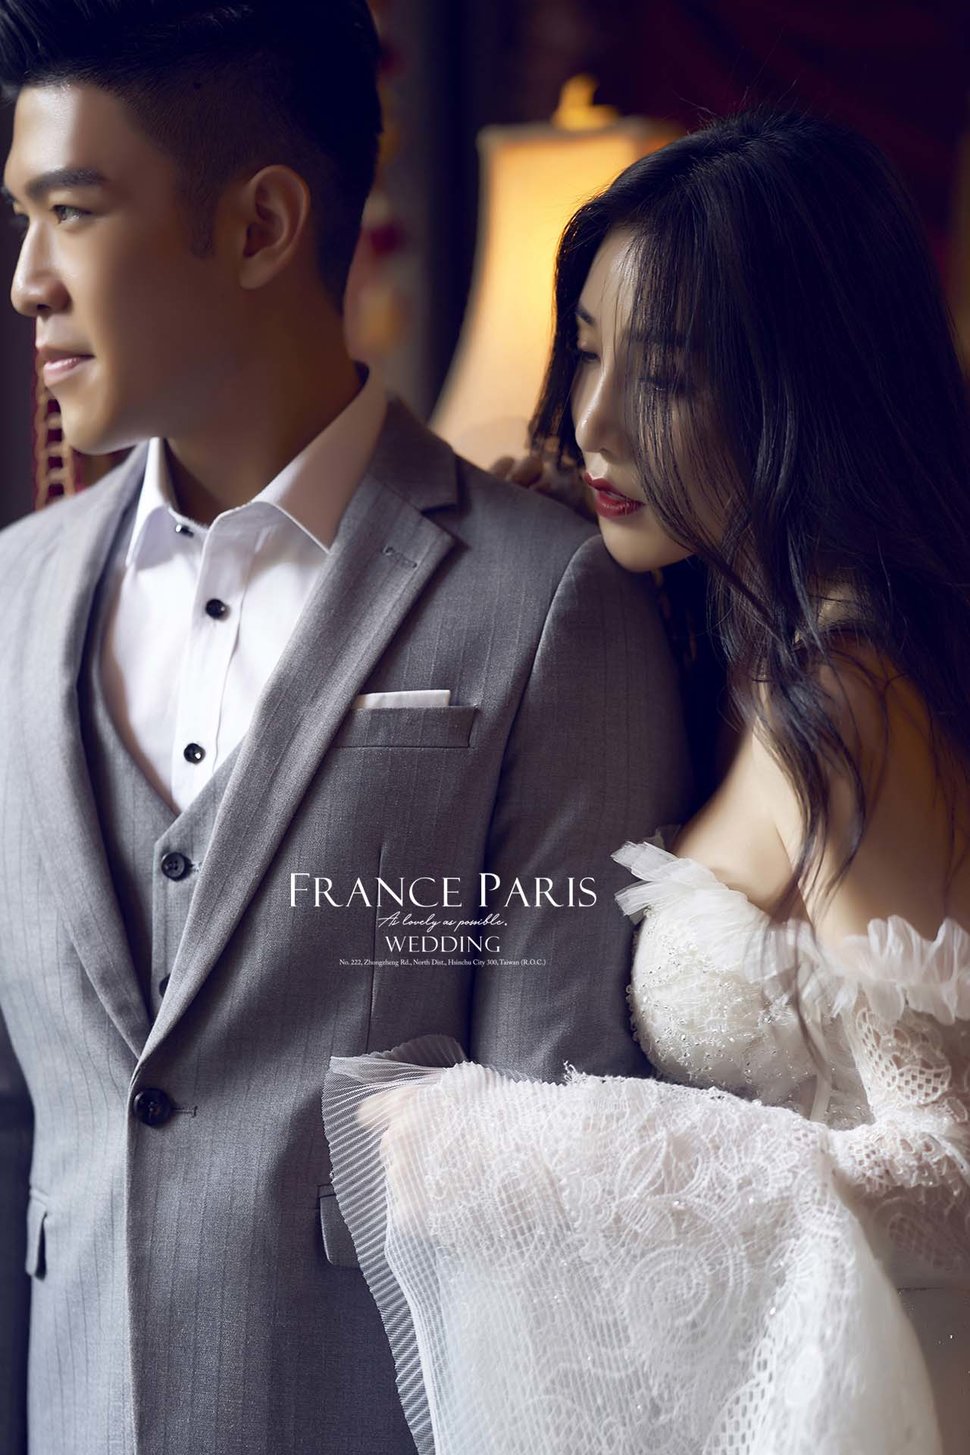 _DSC8656 - 新竹法國巴黎婚紗《結婚吧》